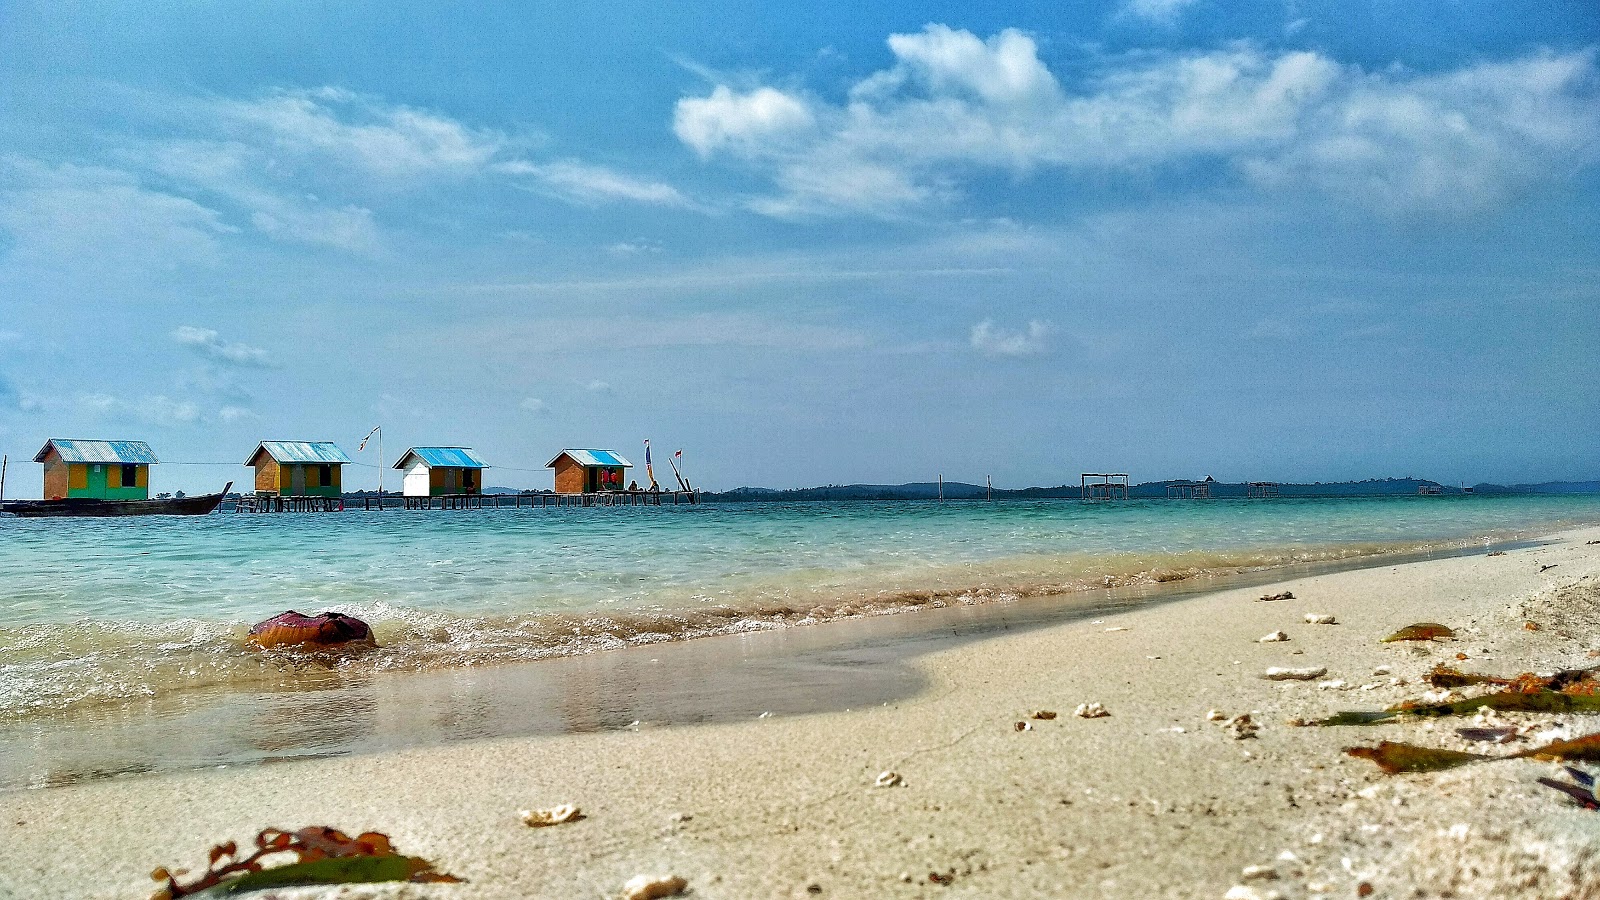 Foto de Wisata Pulau Mubut Darat e o assentamento